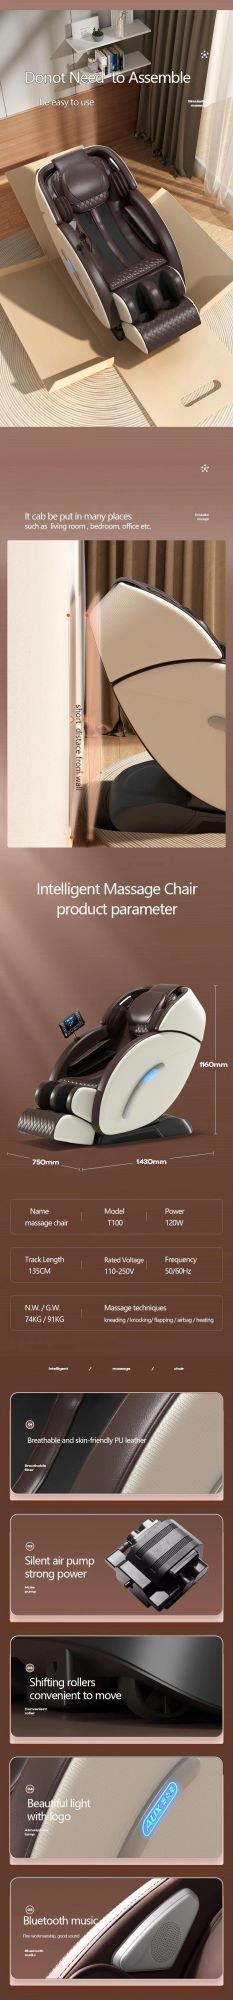 Sauron T100 Shiatsu 3D Airbag Heating Foot Roller Massage Chair Price